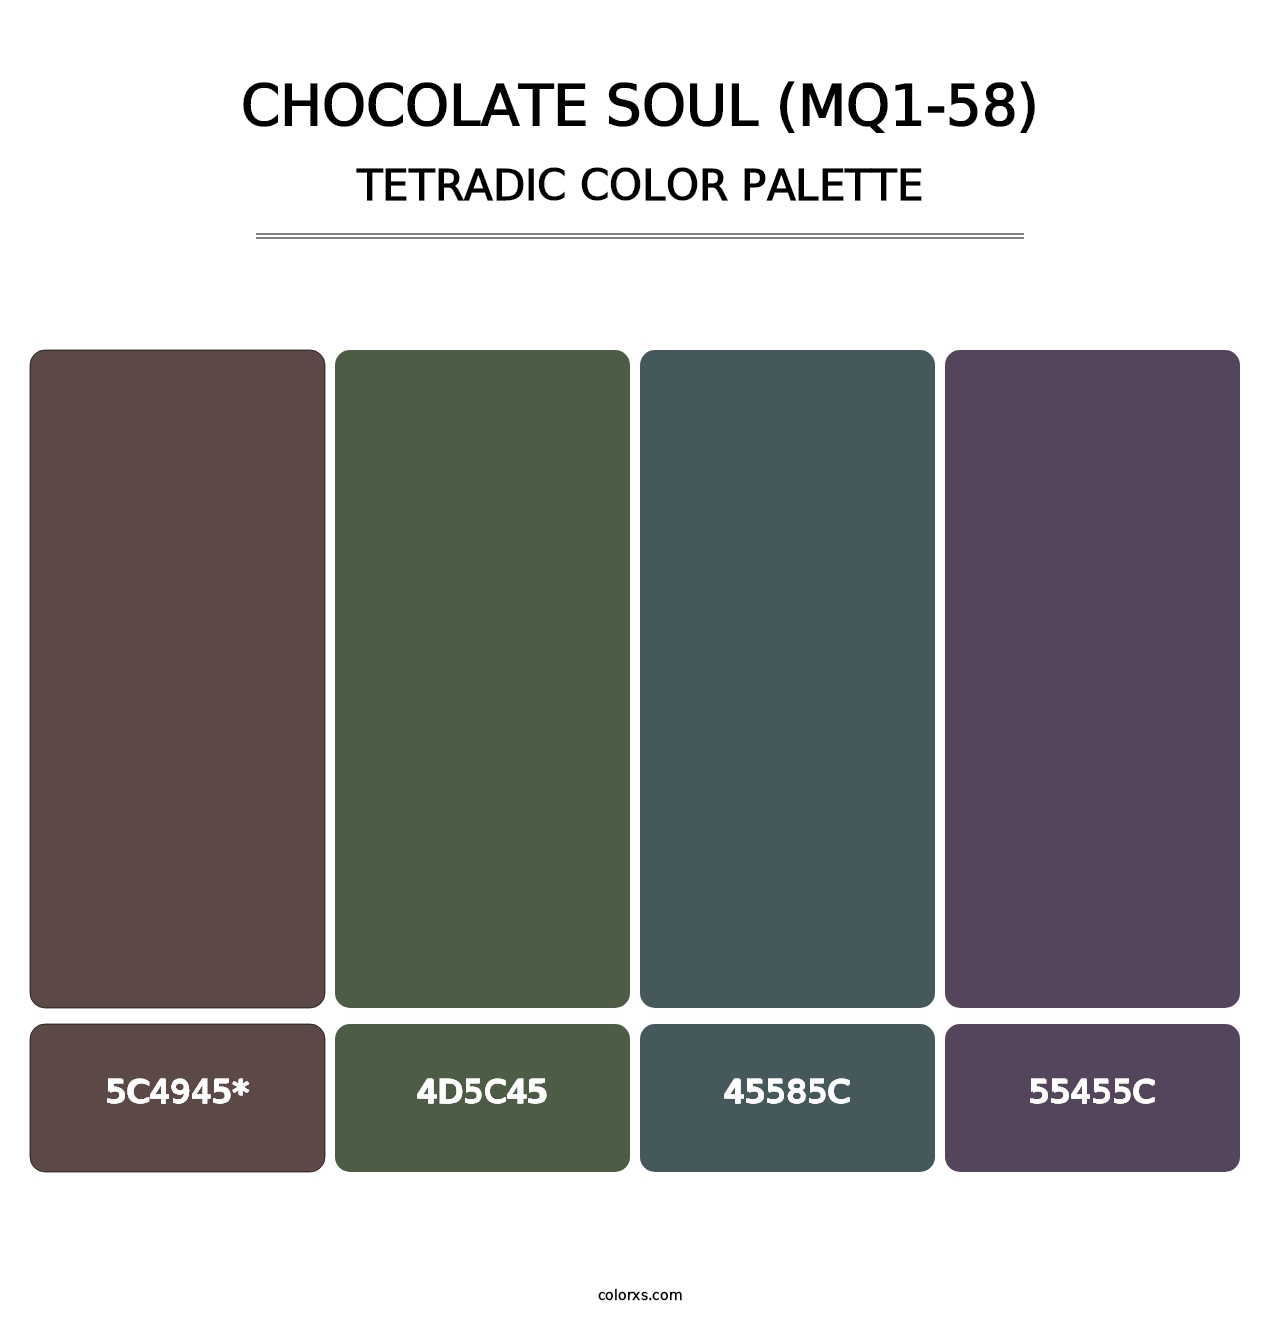 Chocolate Soul (MQ1-58) - Tetradic Color Palette